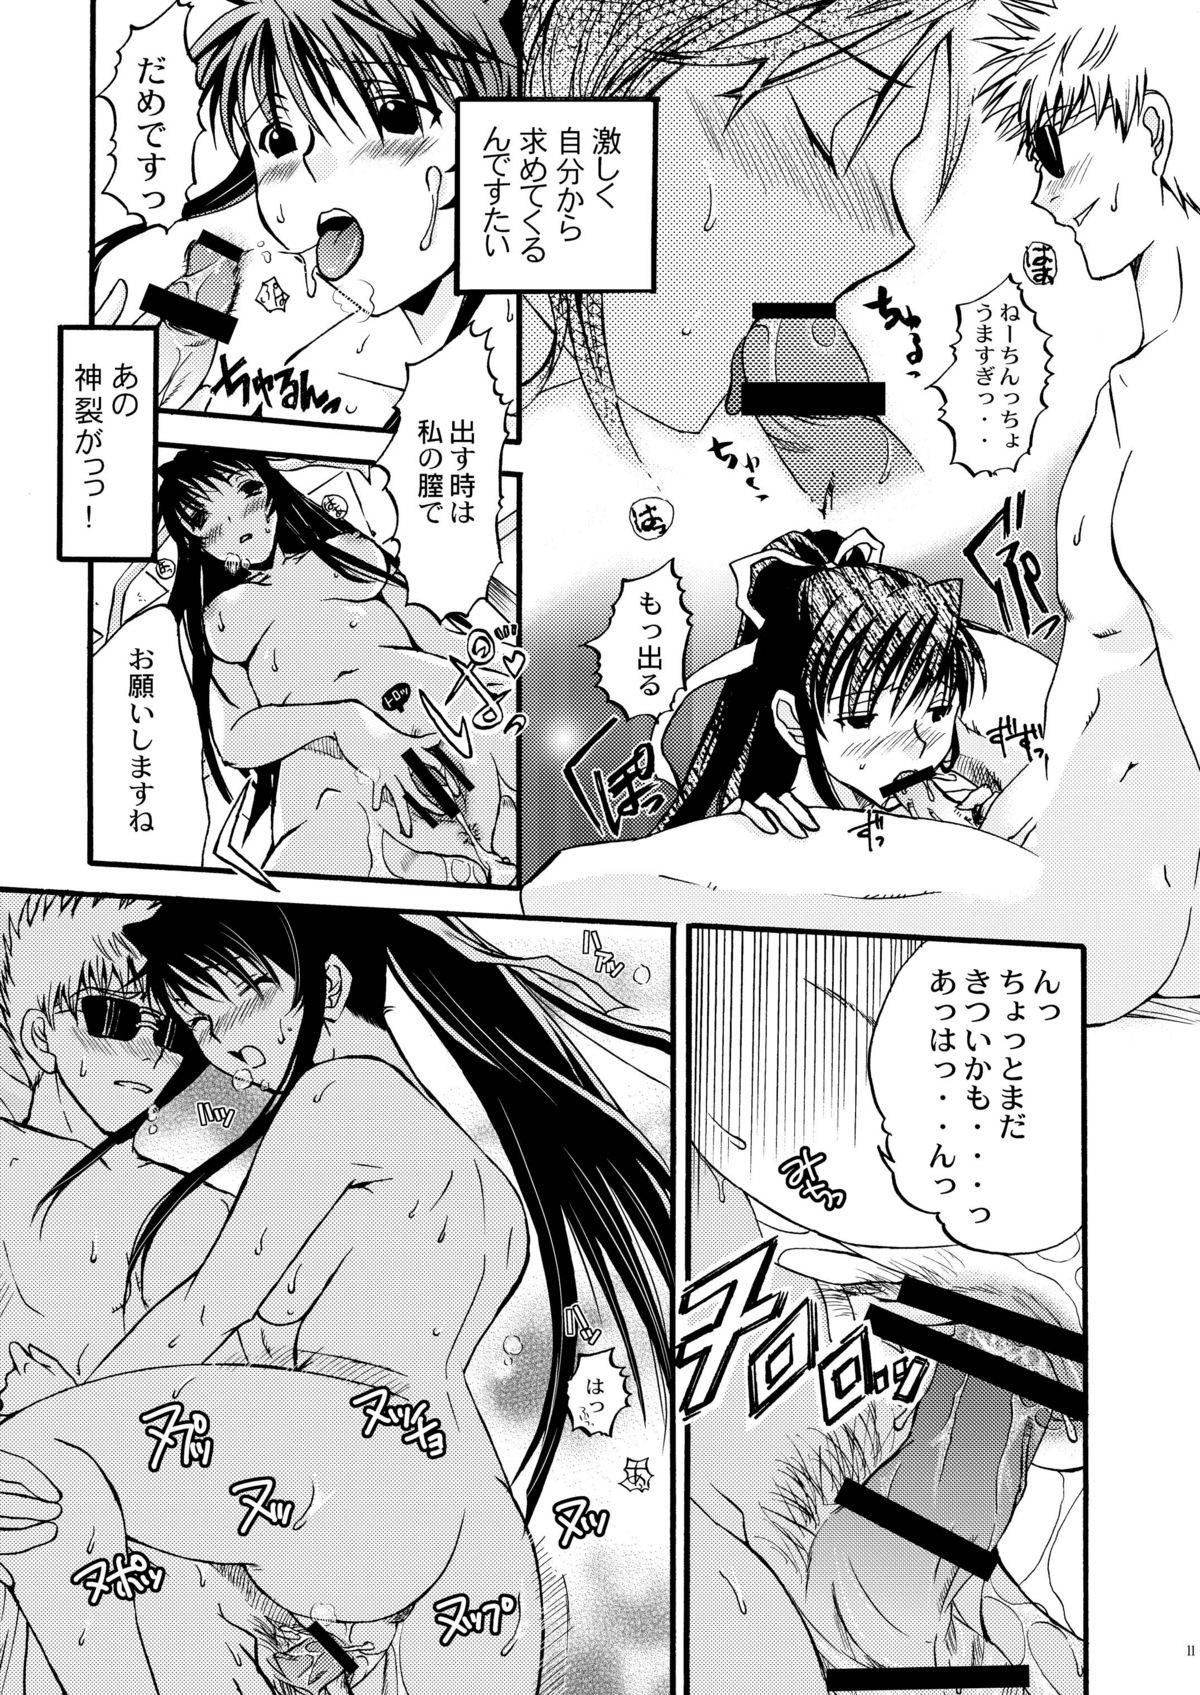 Young Tits Kanzaki SPECIAL - Toaru majutsu no index Show - Page 12